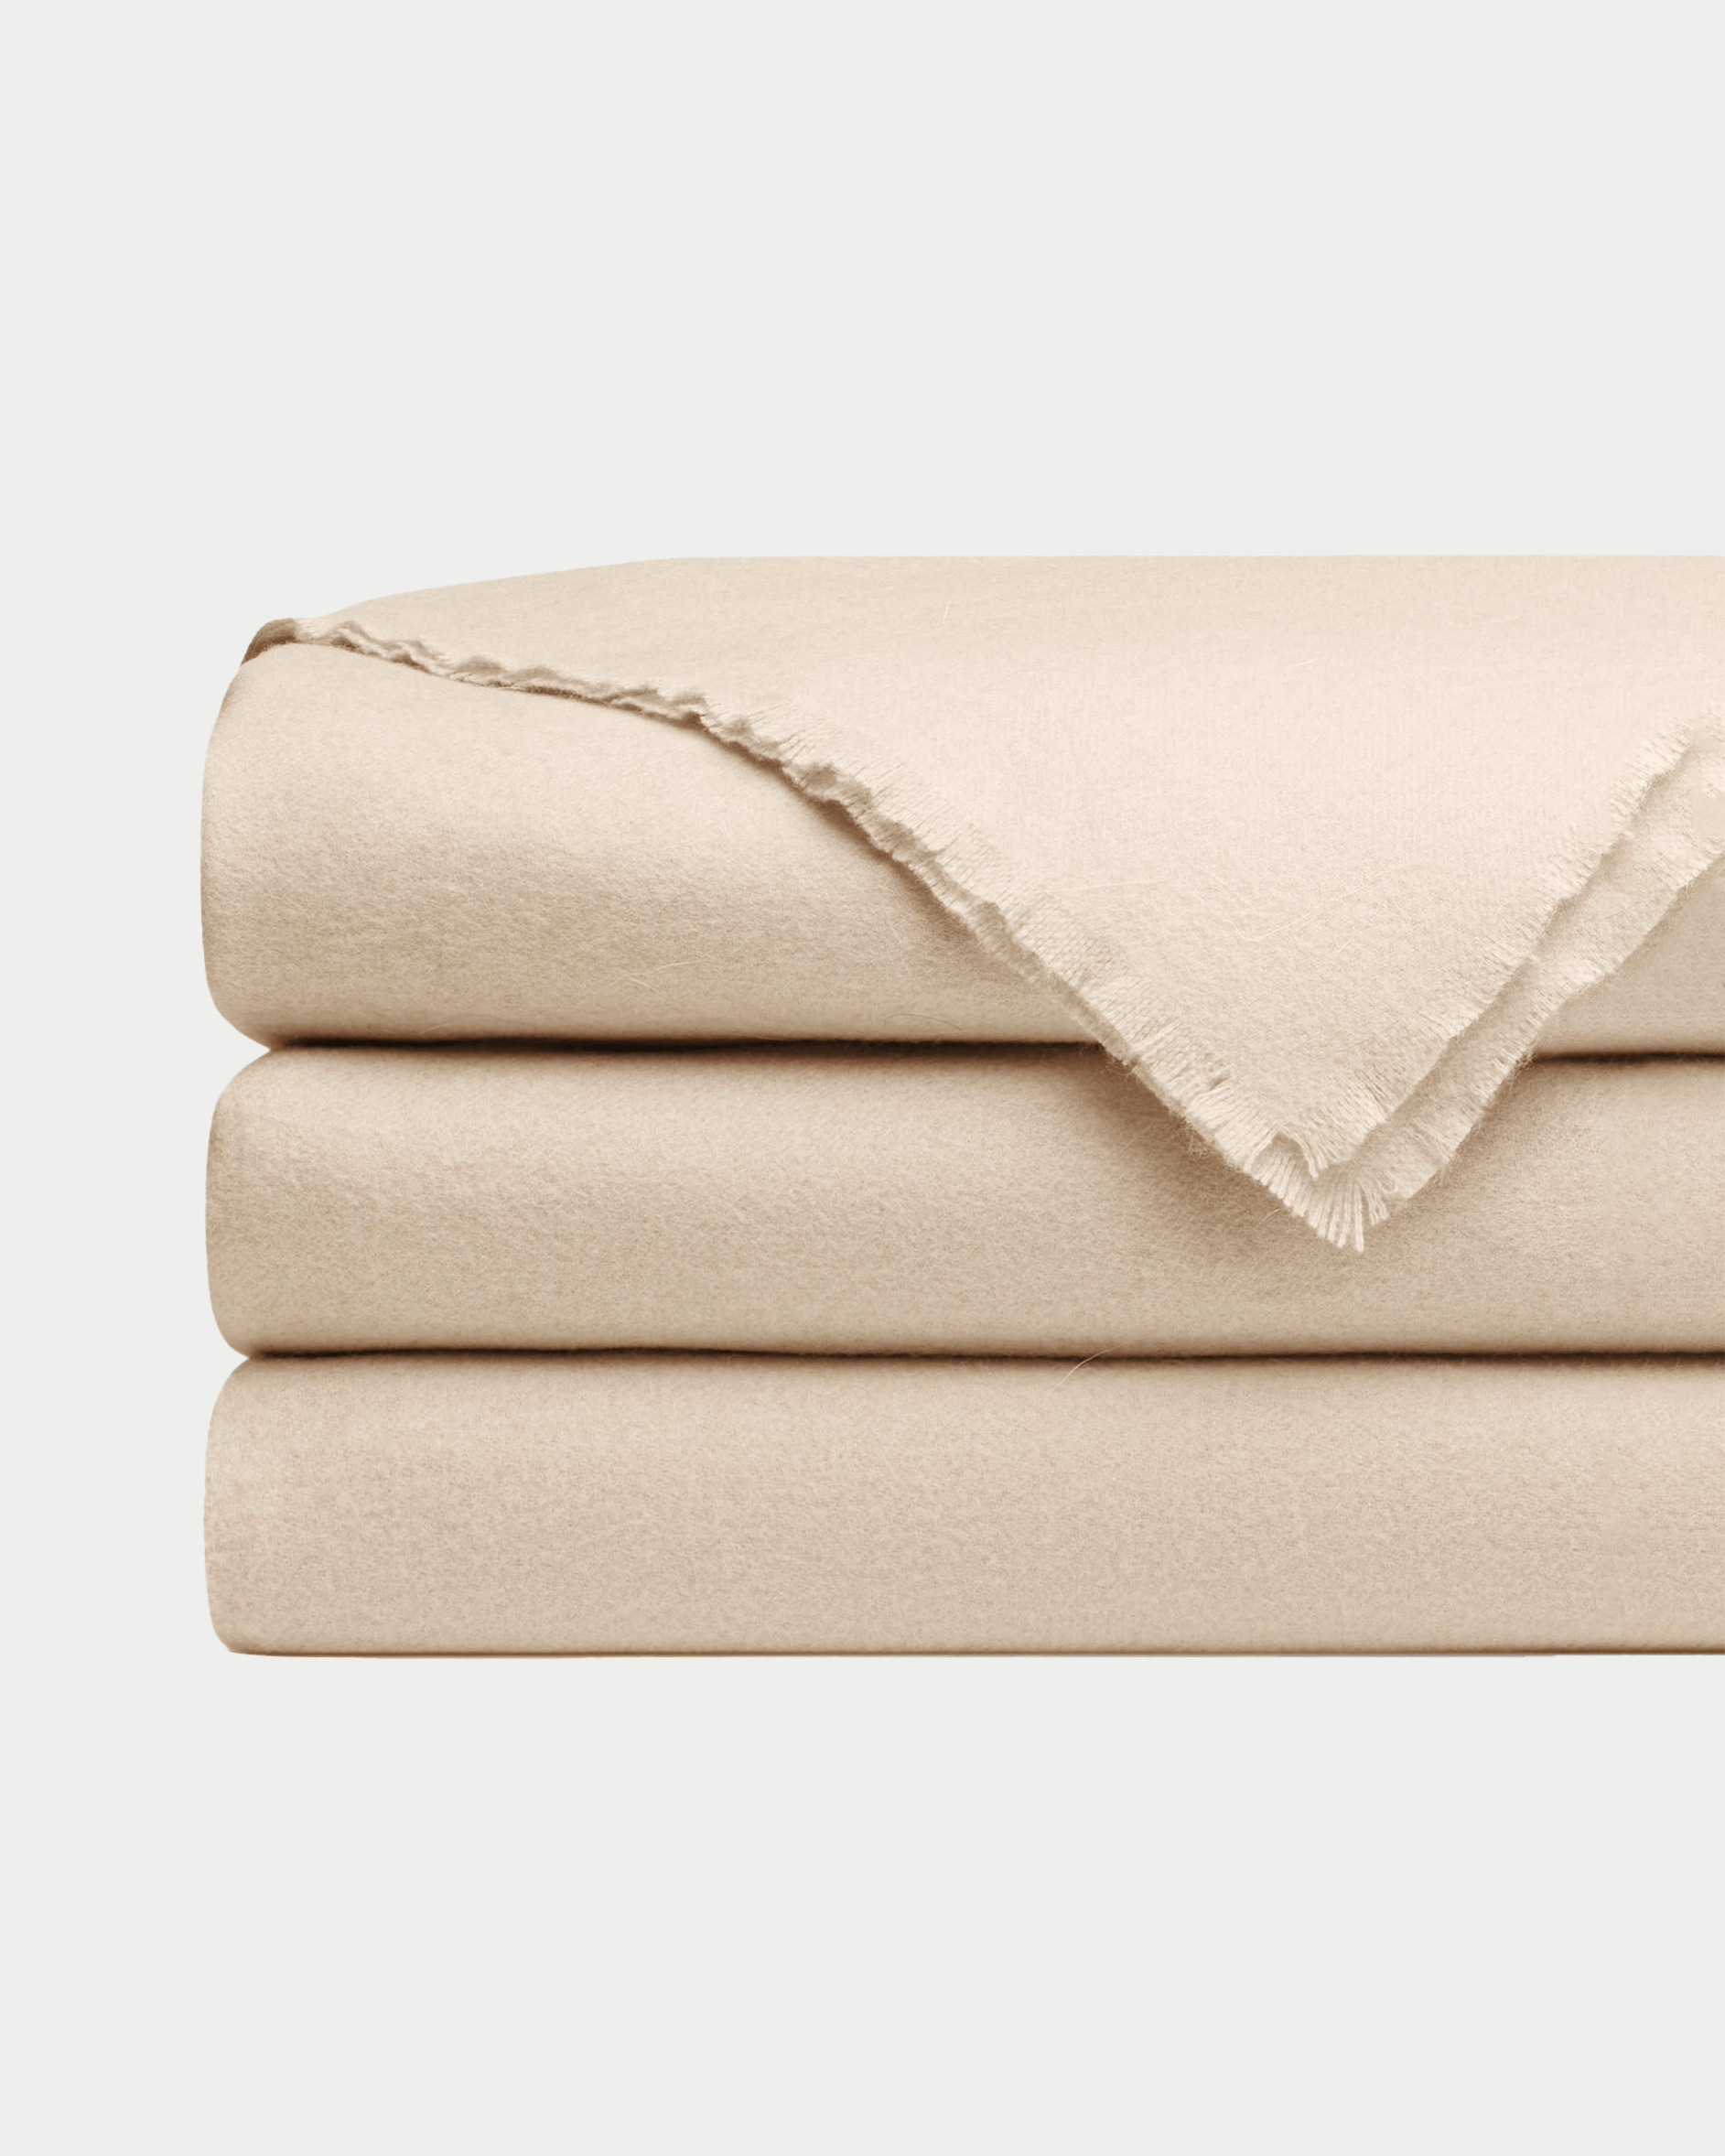 Dune cashmere fringe blanket folded with white background |Color:Dune